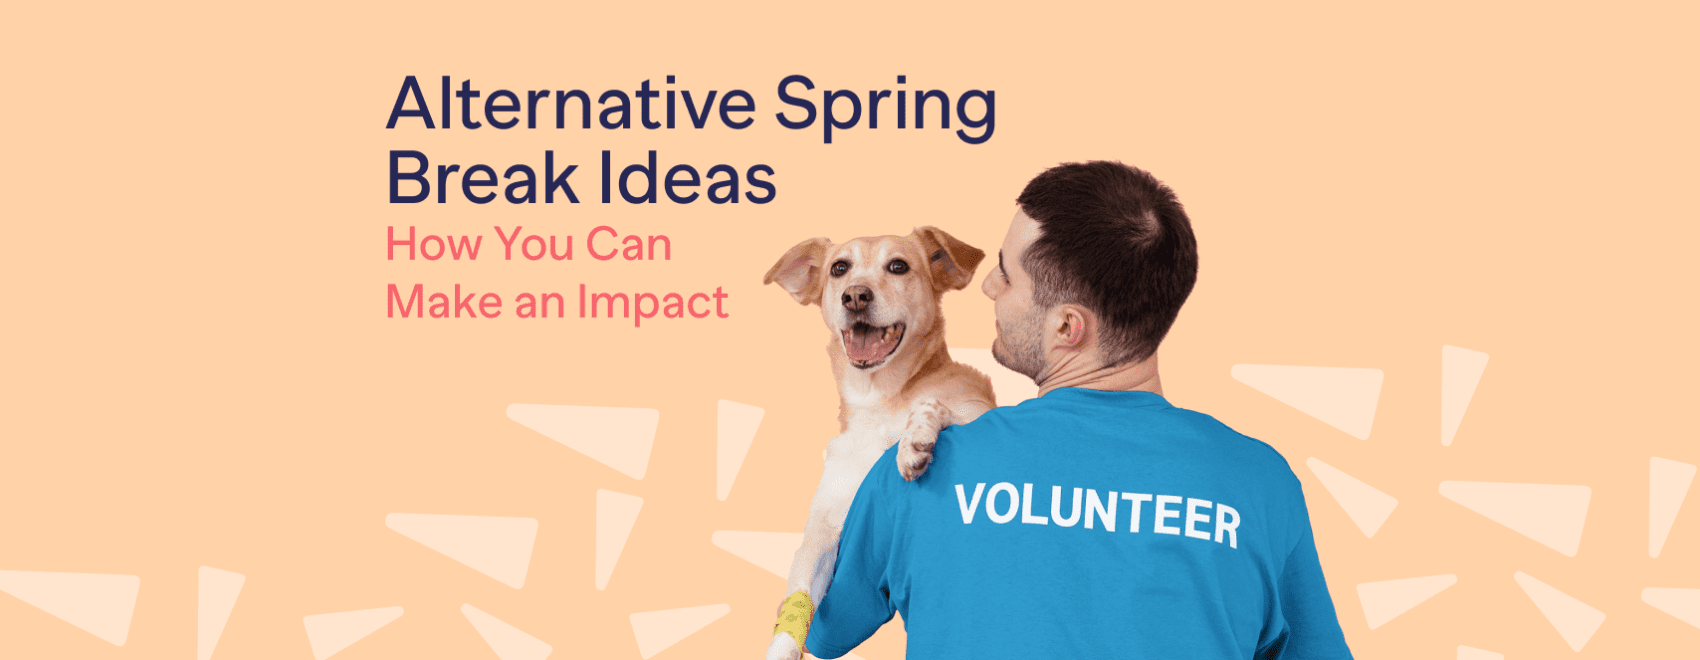 alternative spring break ideas